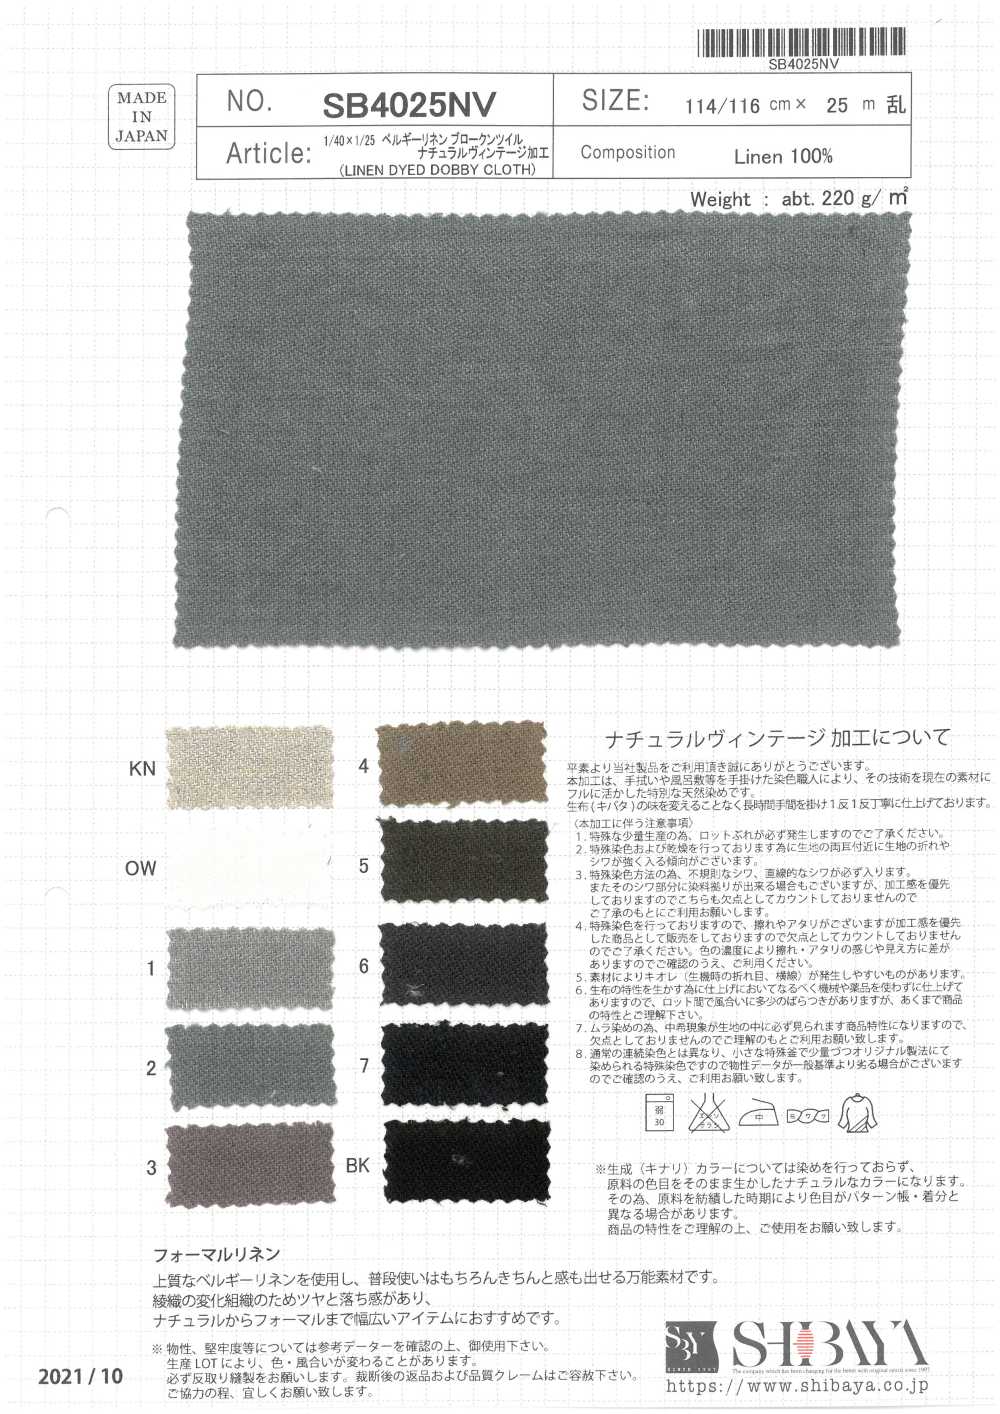 SB4025NV 1/40 × 1/25 Belgian Linen Broken Twill Natural Vintage Processing[Textile / Fabric] SHIBAYA